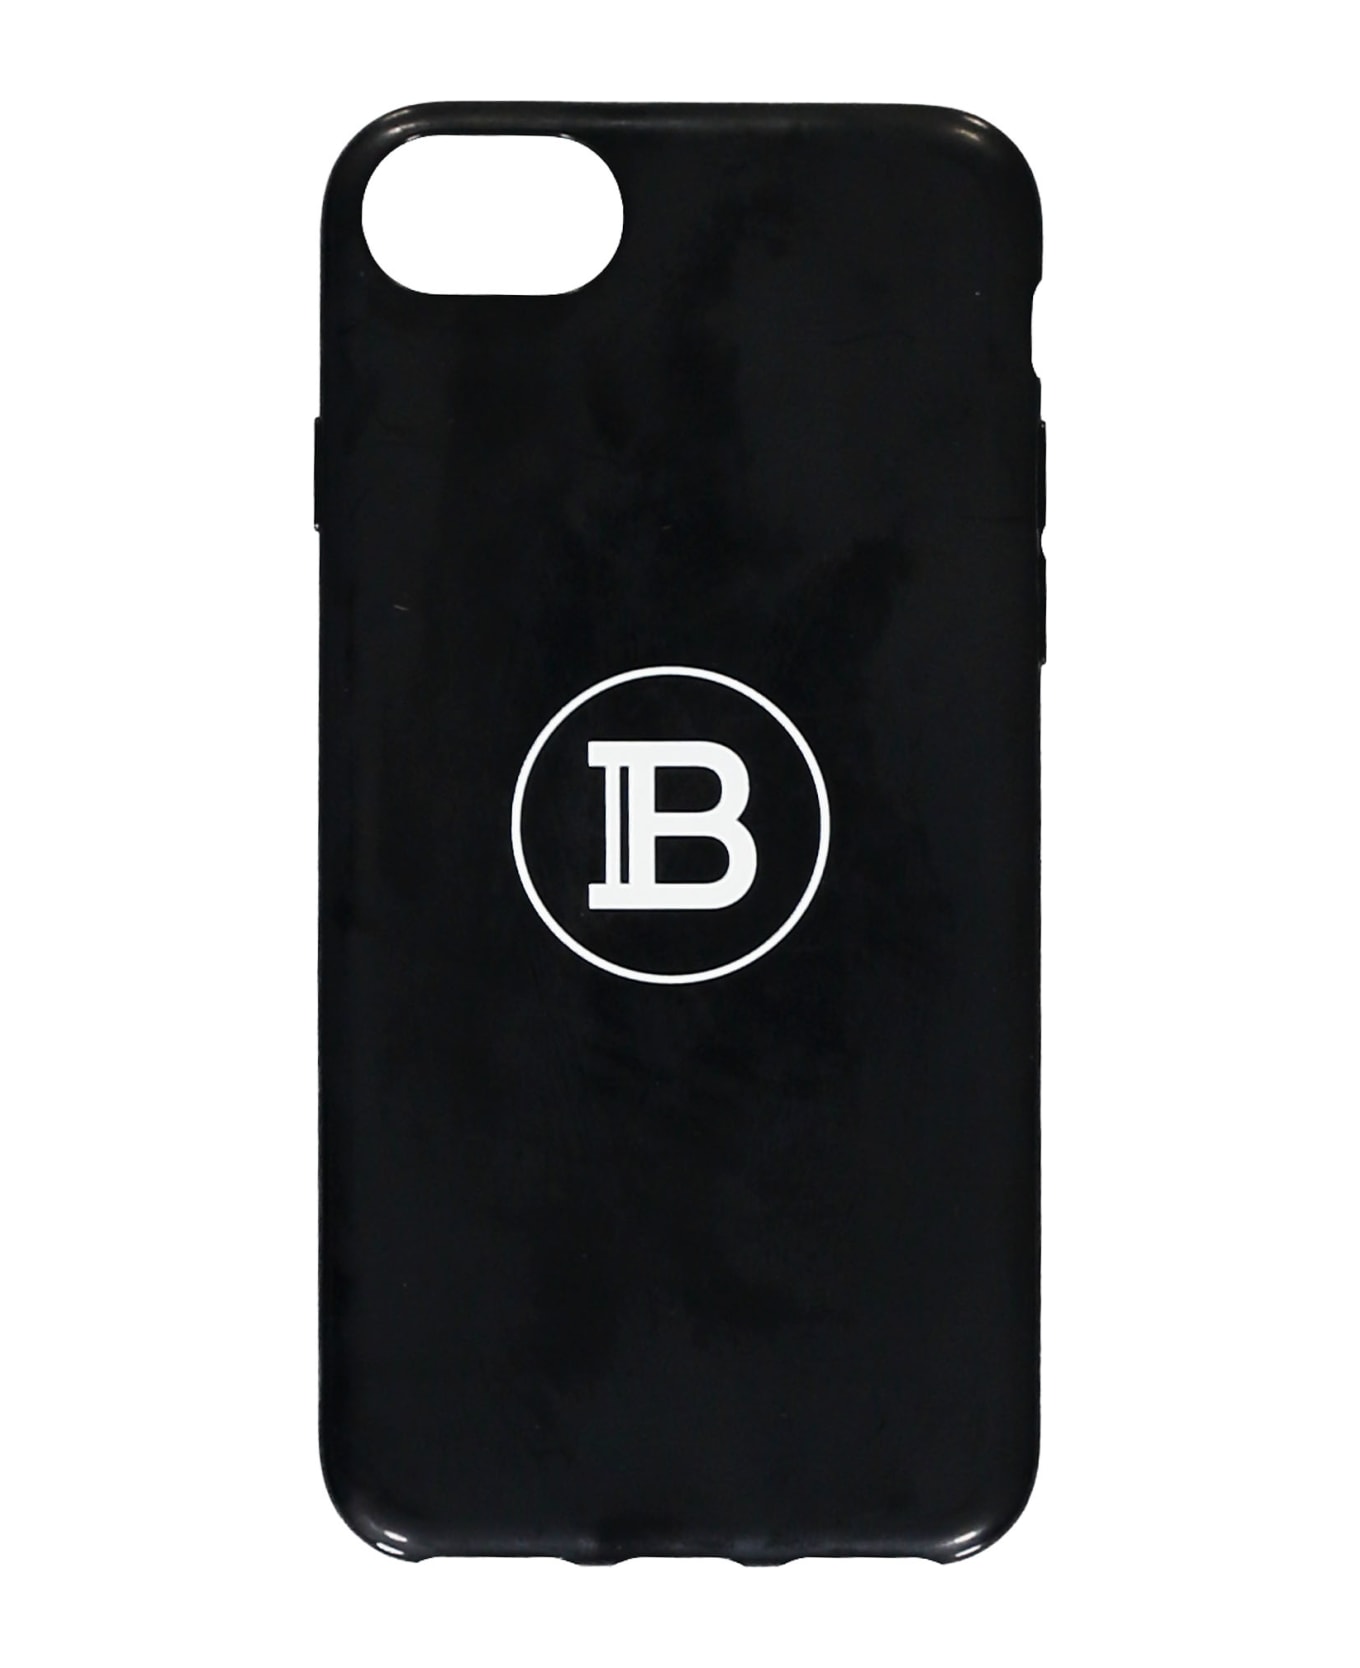 Balmain Iphone Case - black デジタルアクセサリー